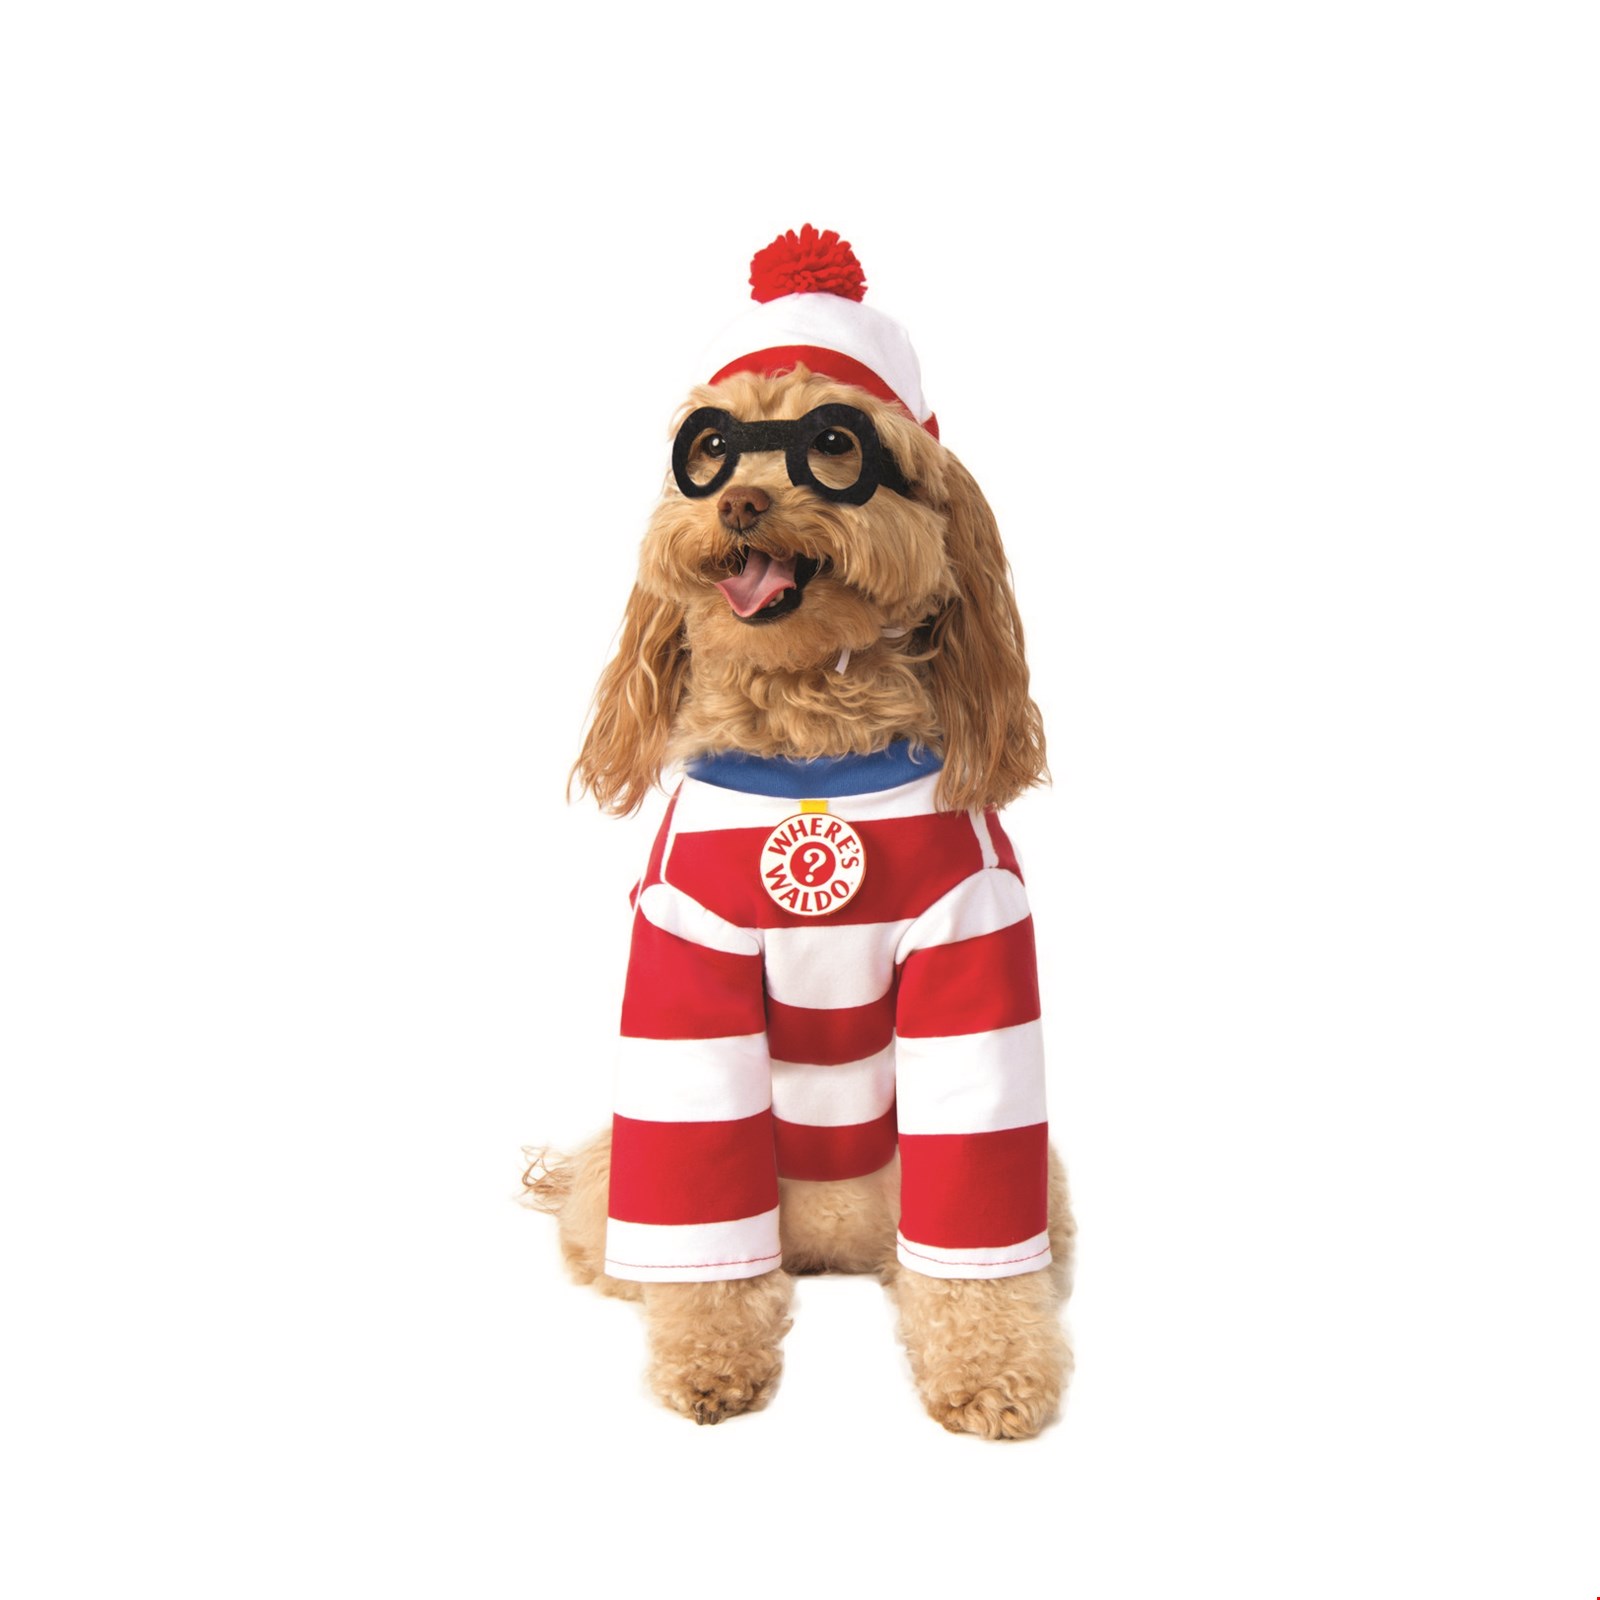 Where's Waldo Woof Dog Halloween Costume - image 1 of 4